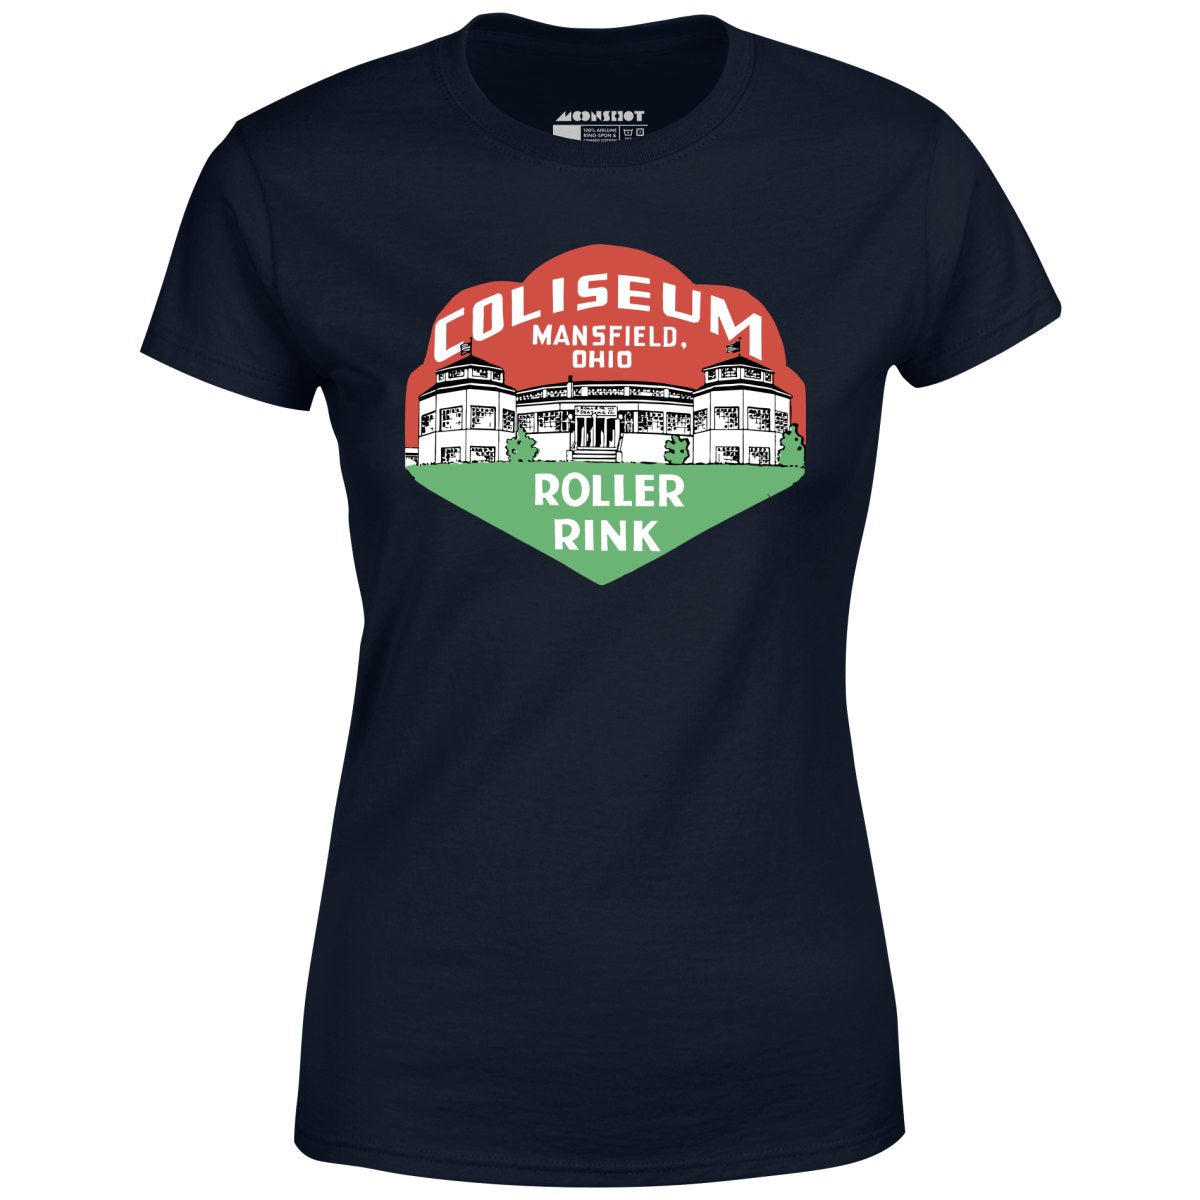 Coliseum - Mansfield, OH - Vintage Roller Rink - Women's T-Shirt